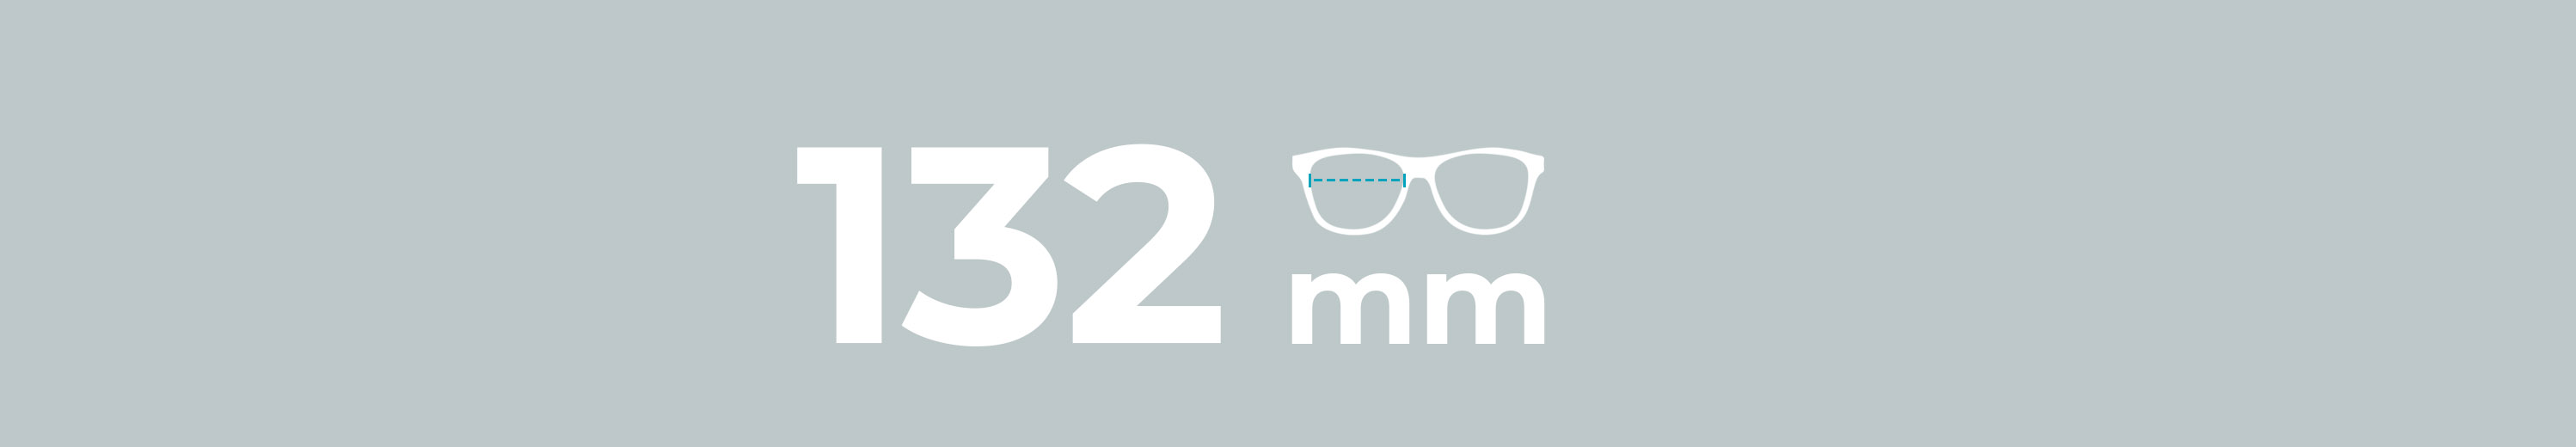 Lens Size: 132mm Glasses